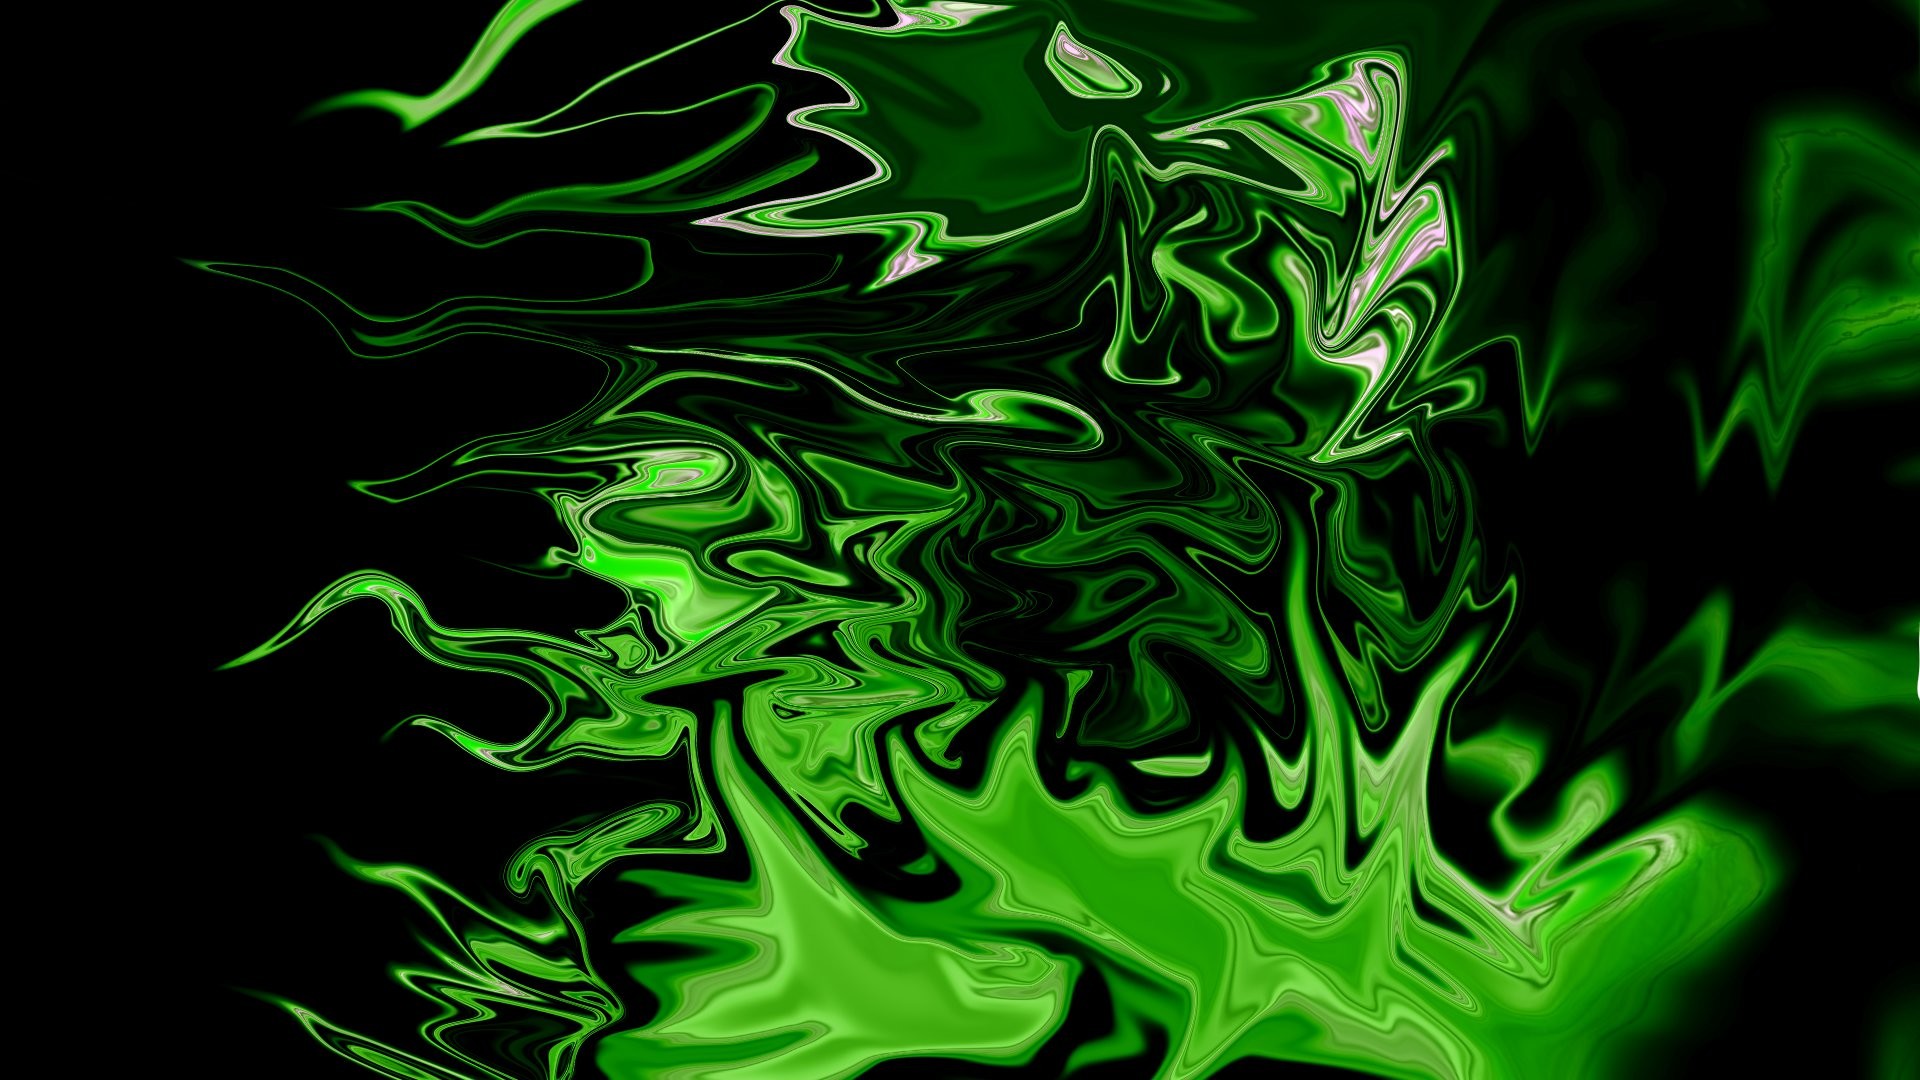 1920x1080 Black and Green Abstract Wallpaper Desktop HD Wallpaper Site Black And Green  Wallpaper Wallpapers)